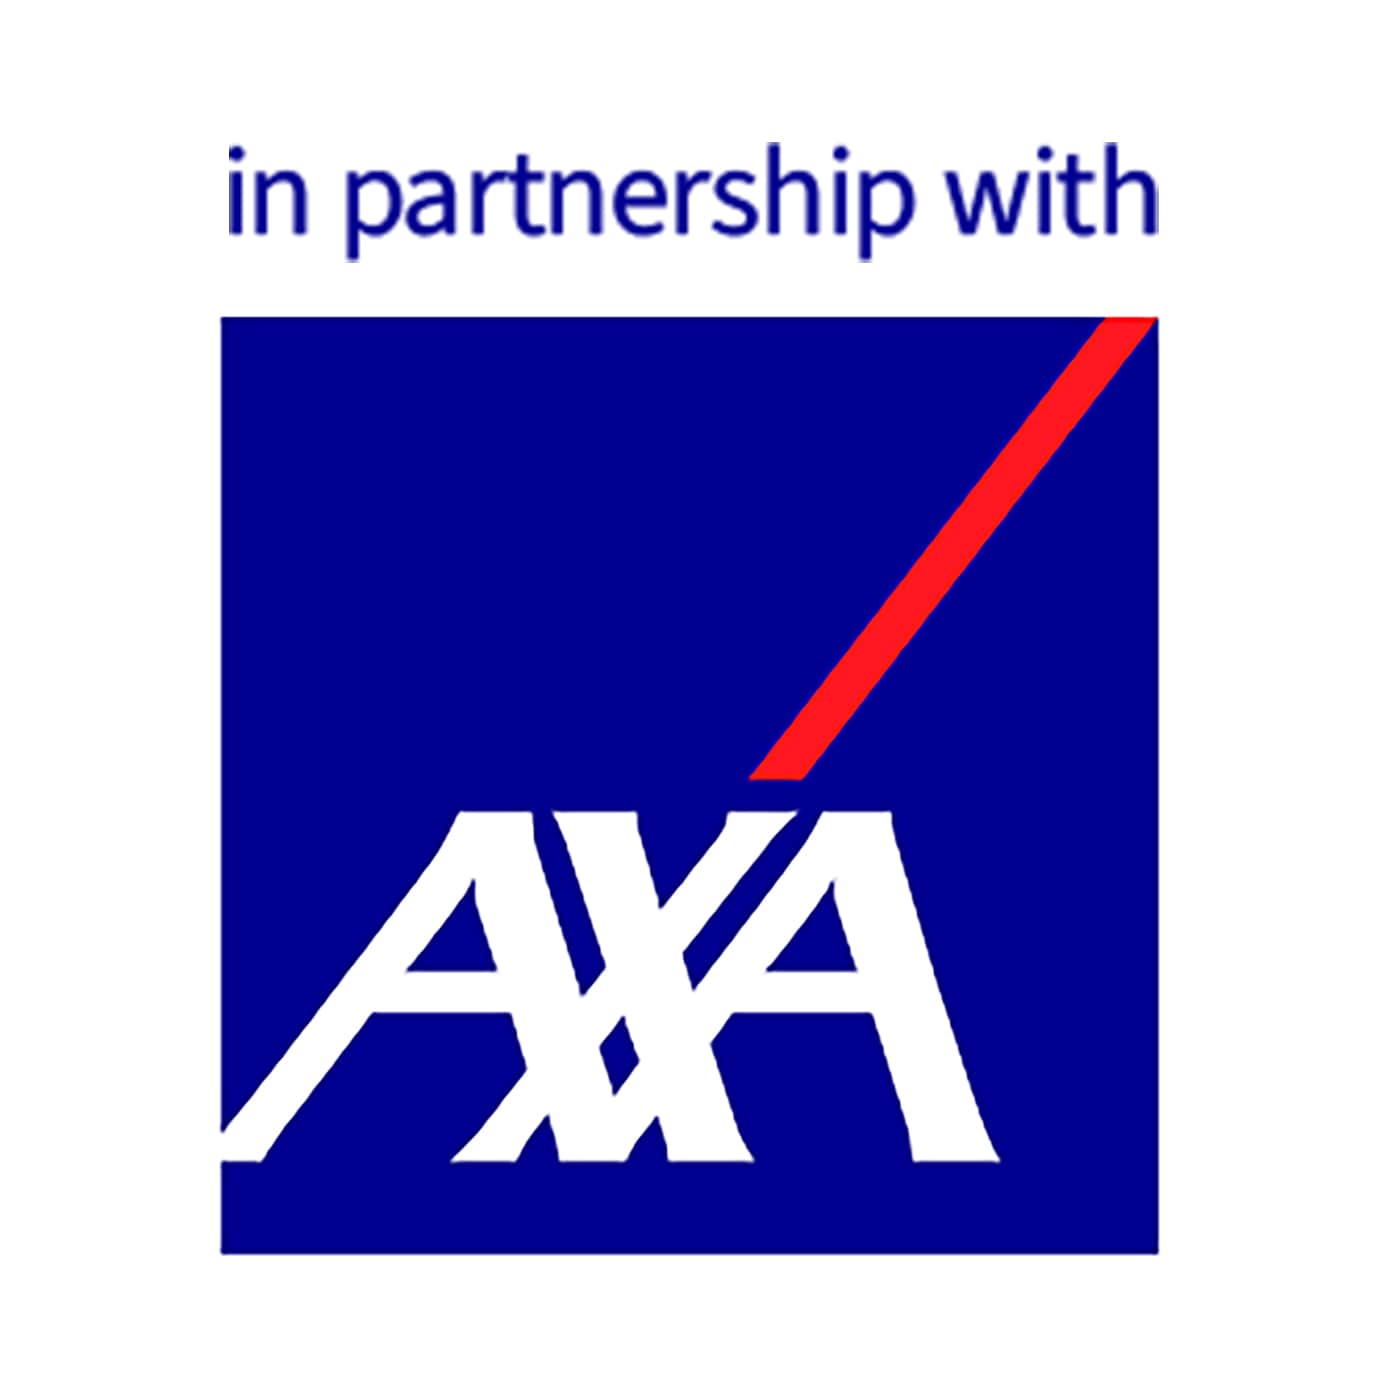 Phone insurance in partnership with AXA